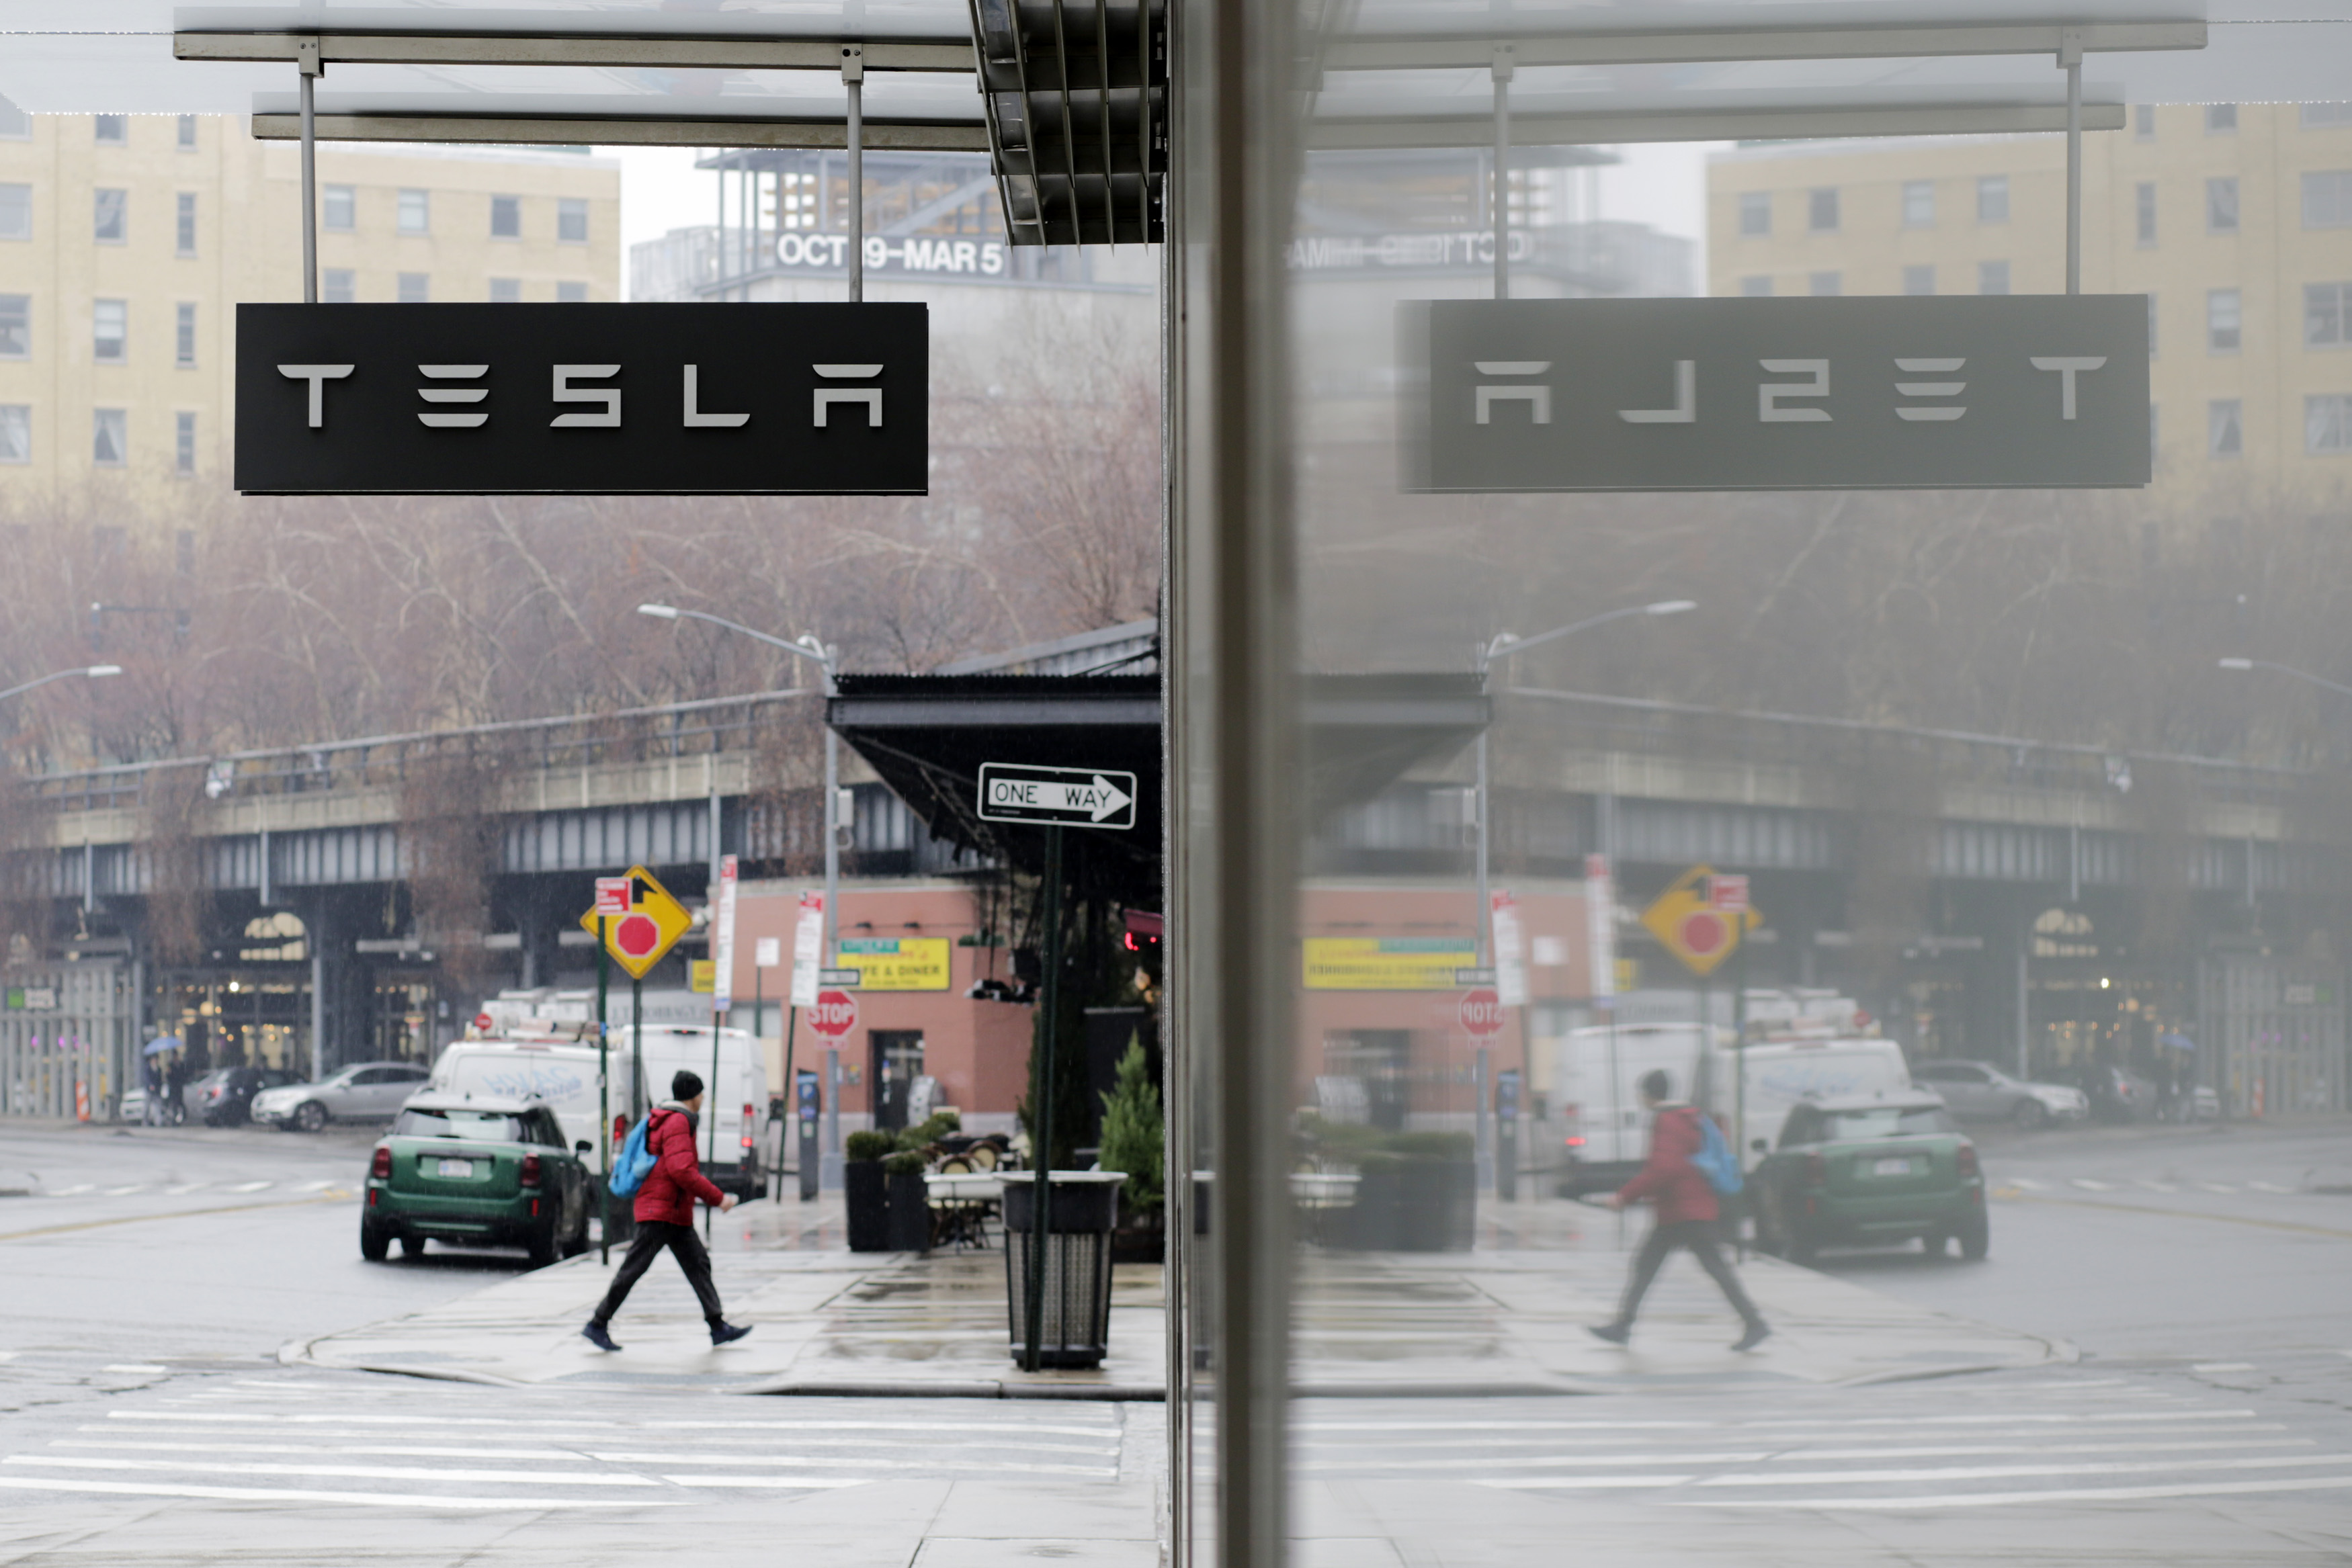 Tesla Autopilot workers are seeking to unionize in New York